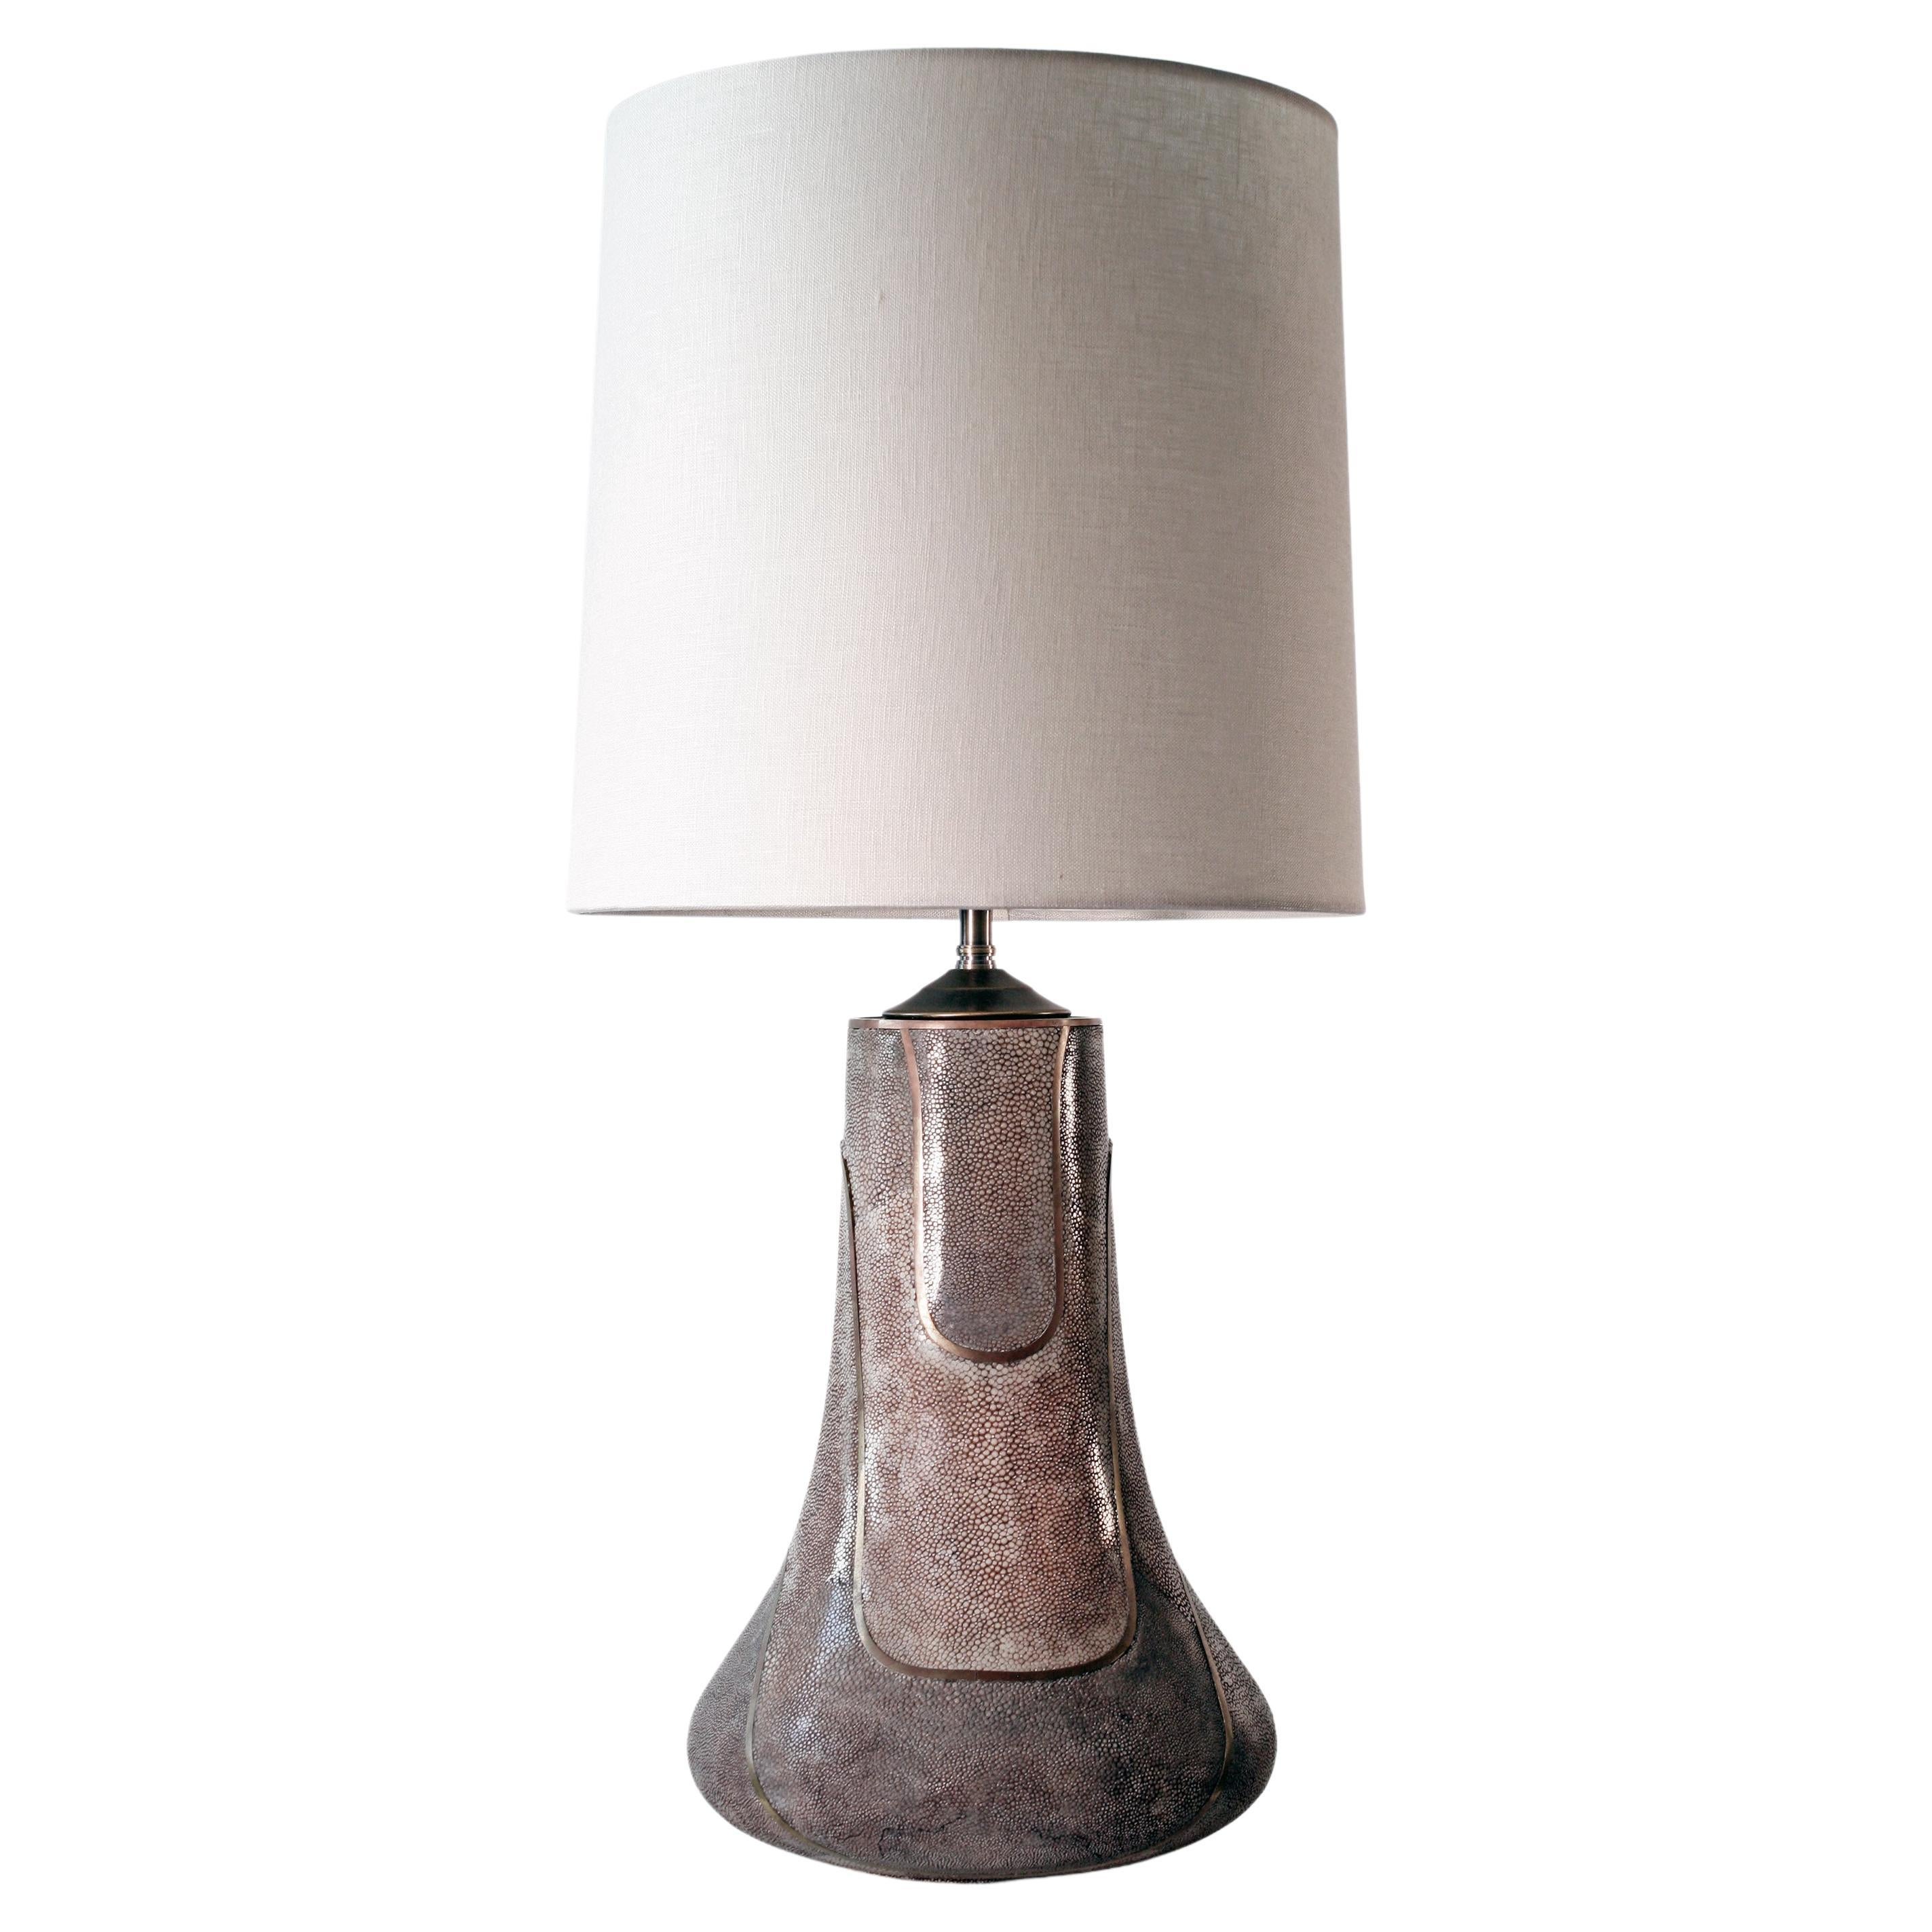 Shagreen Table Lamp, Light Mauve & Bronze, Circa Late 20th Century For Sale